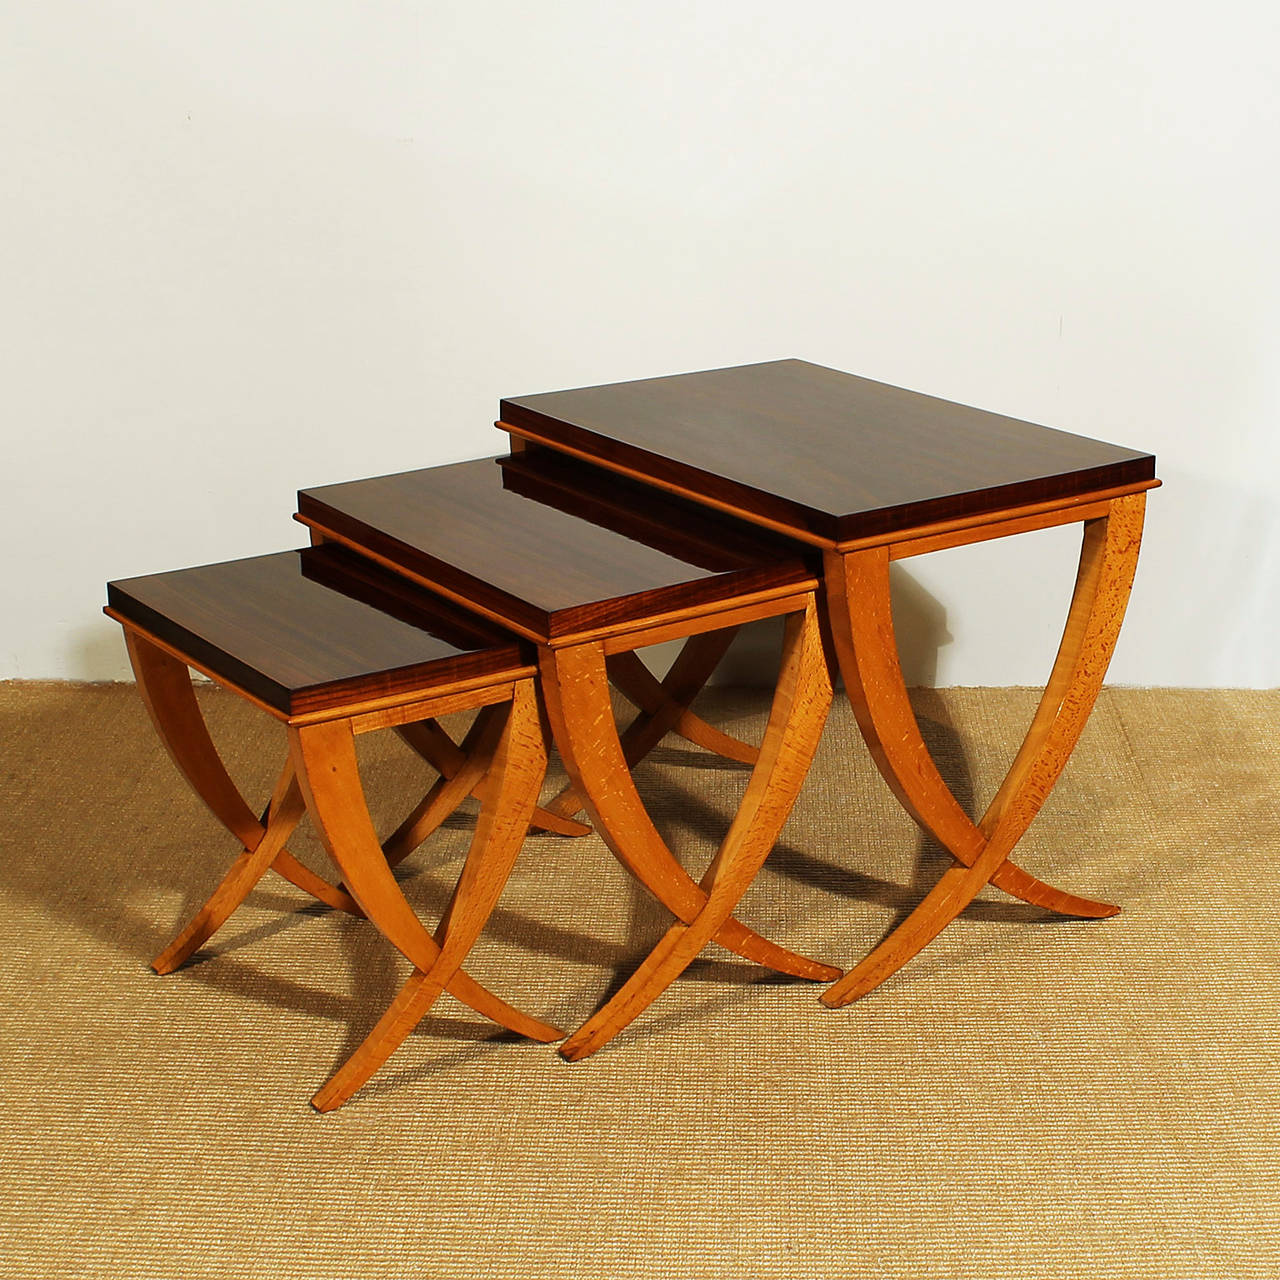 Beautiful nesting tables, 3 pieces, beech wood and rosewood veneer, french polish.
Design: De Coene
Belgium c. 1940

Big table: 40 x 60 x 49 cm
Medium table: 34 x 50 x 44 cm
Small table: 28 x 40 x 40 cm